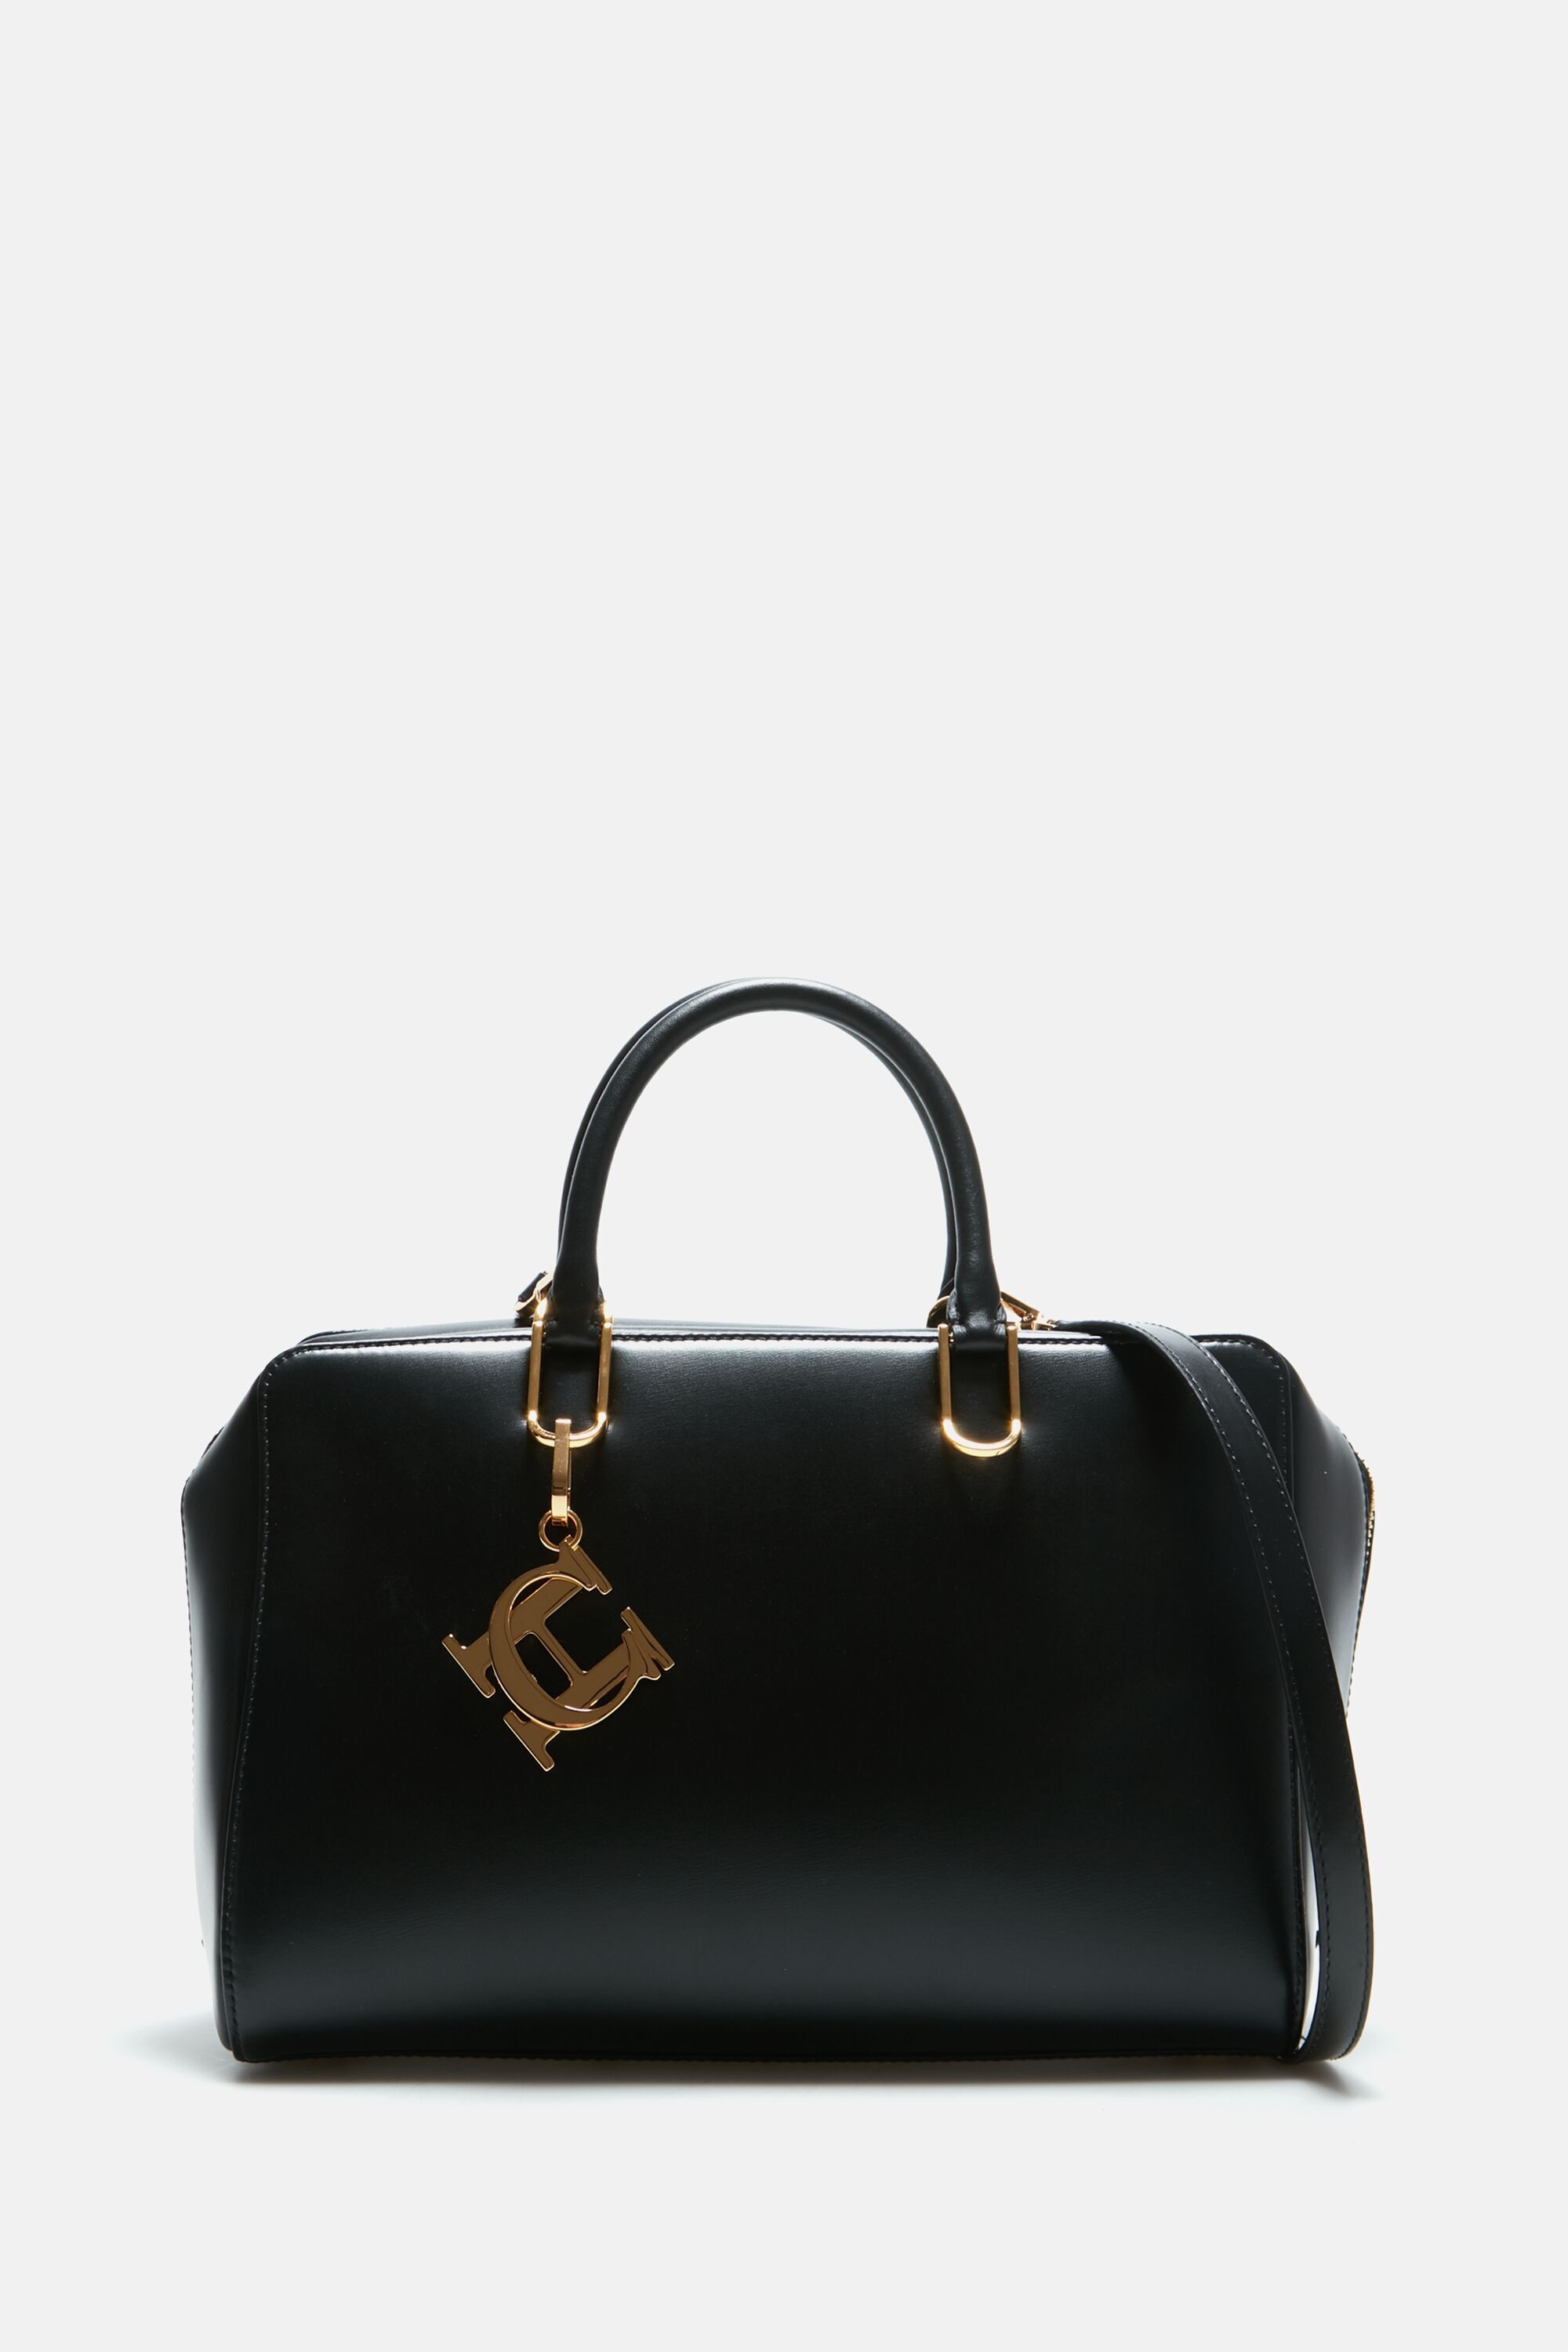 Duke  Medium handbag black - CH Carolina Herrera United States